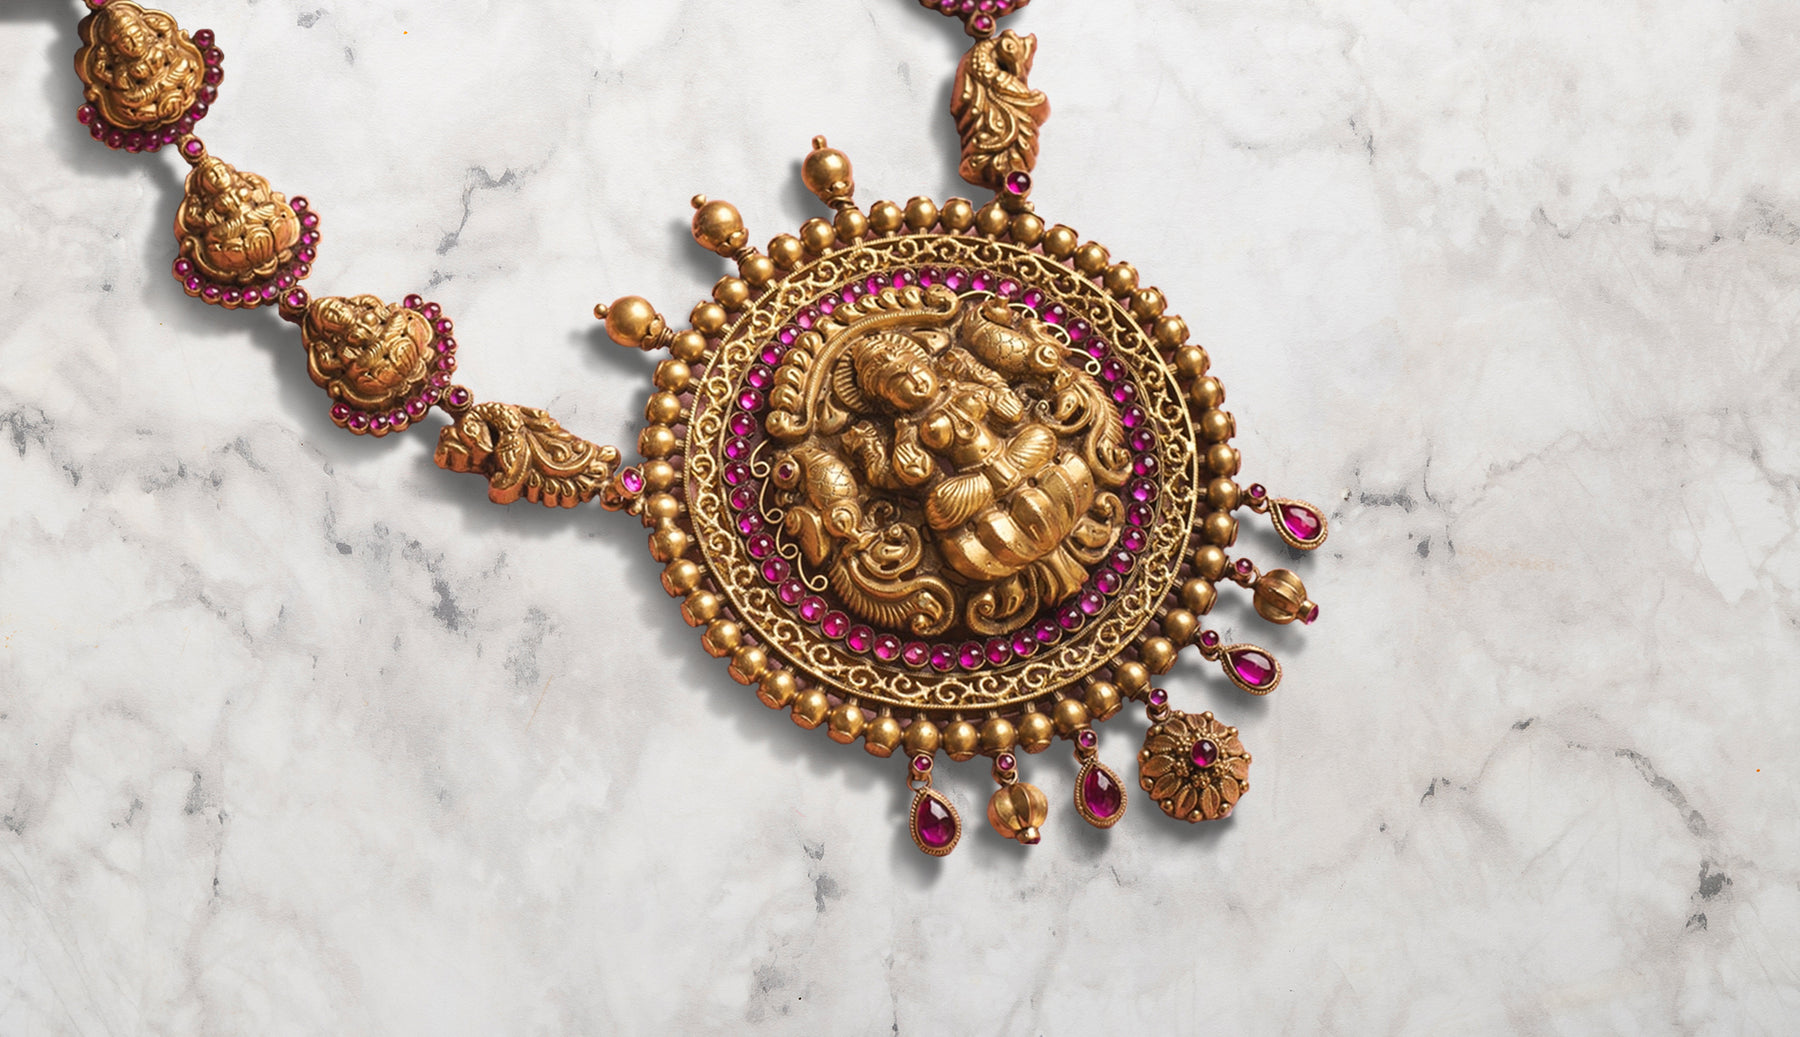 Traditional Indian Jewellery of Indian heritage jewellery